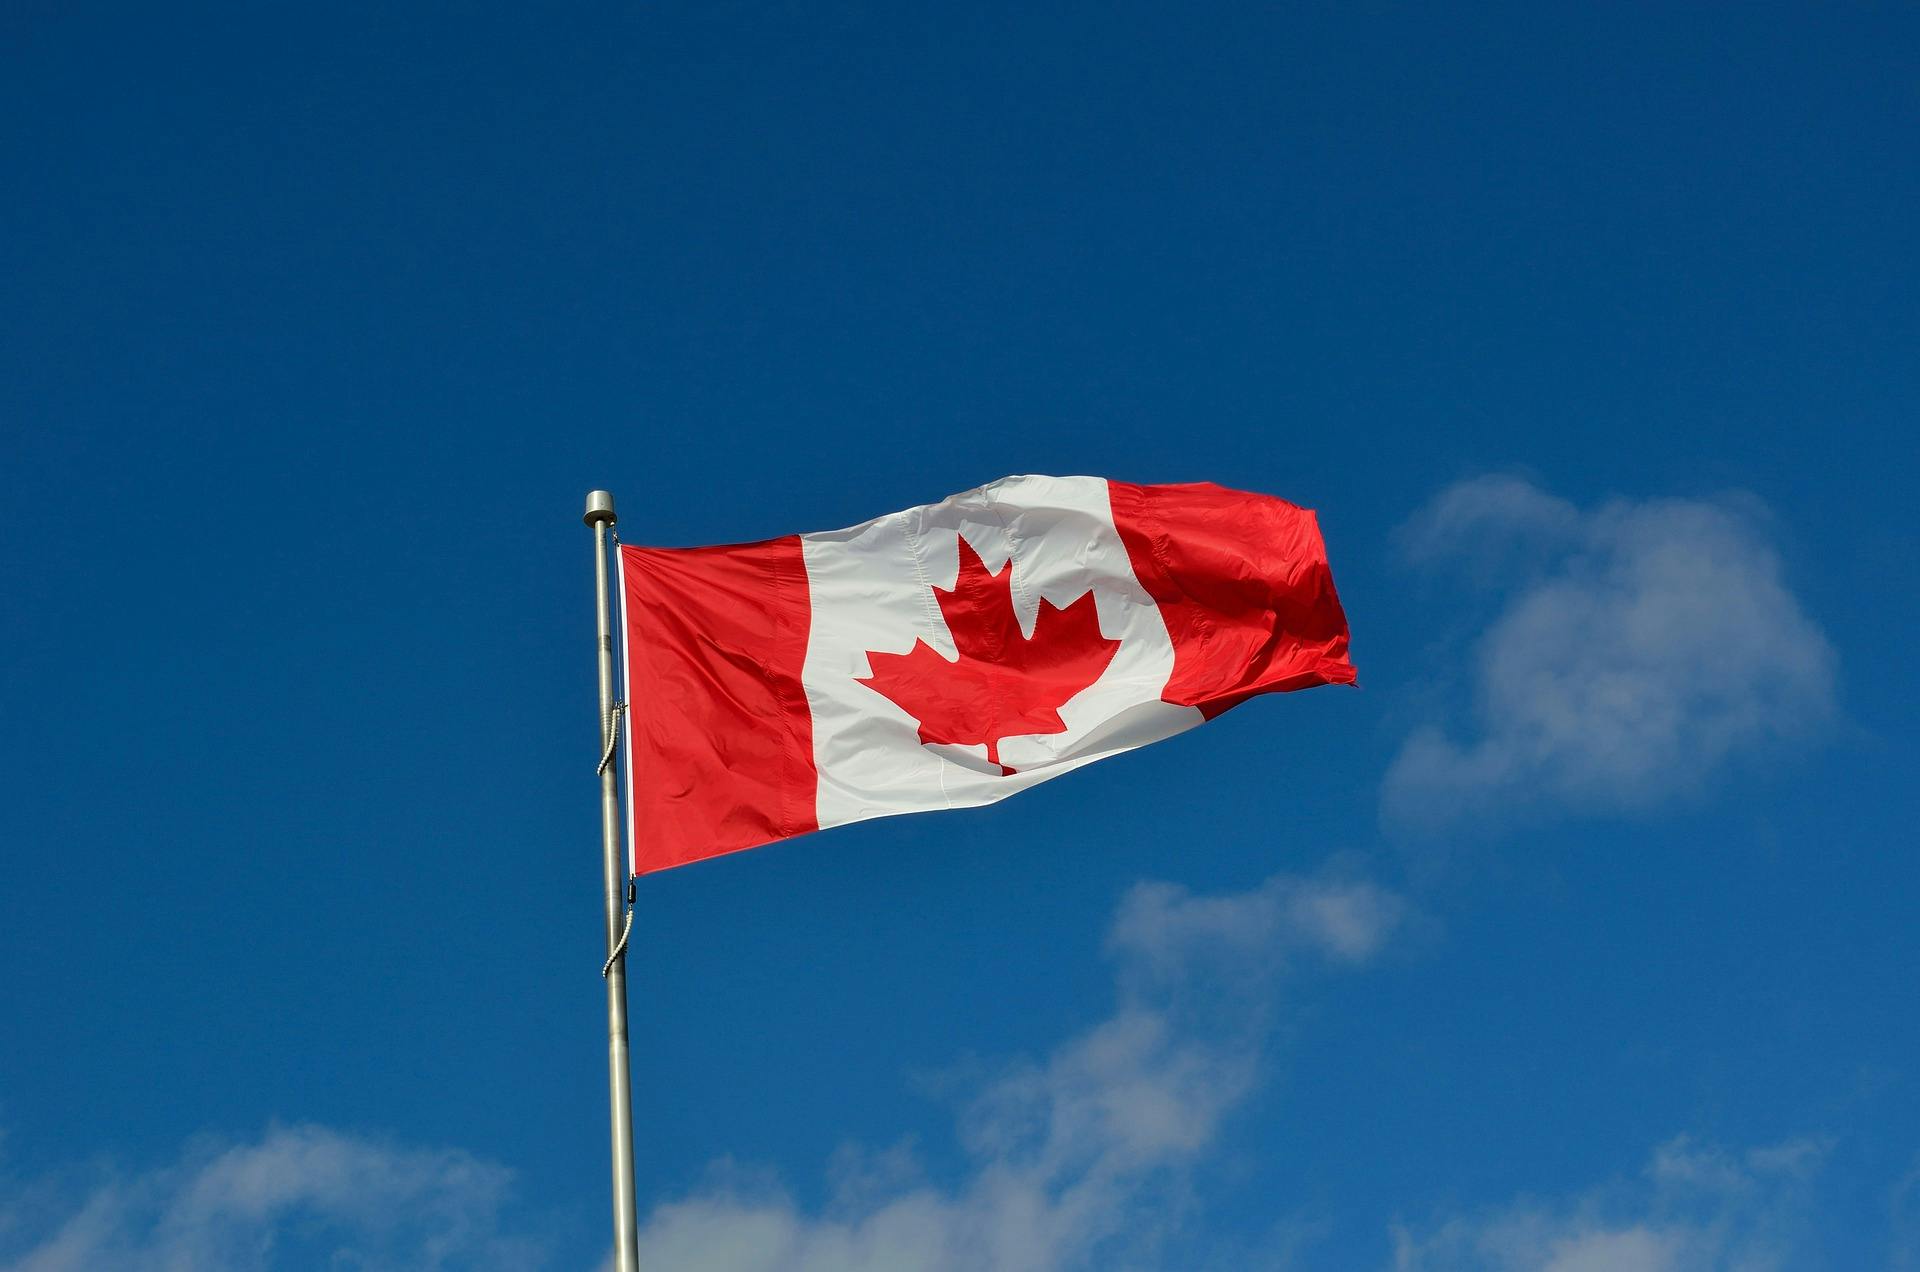 canada flag flying on pole under blue sky